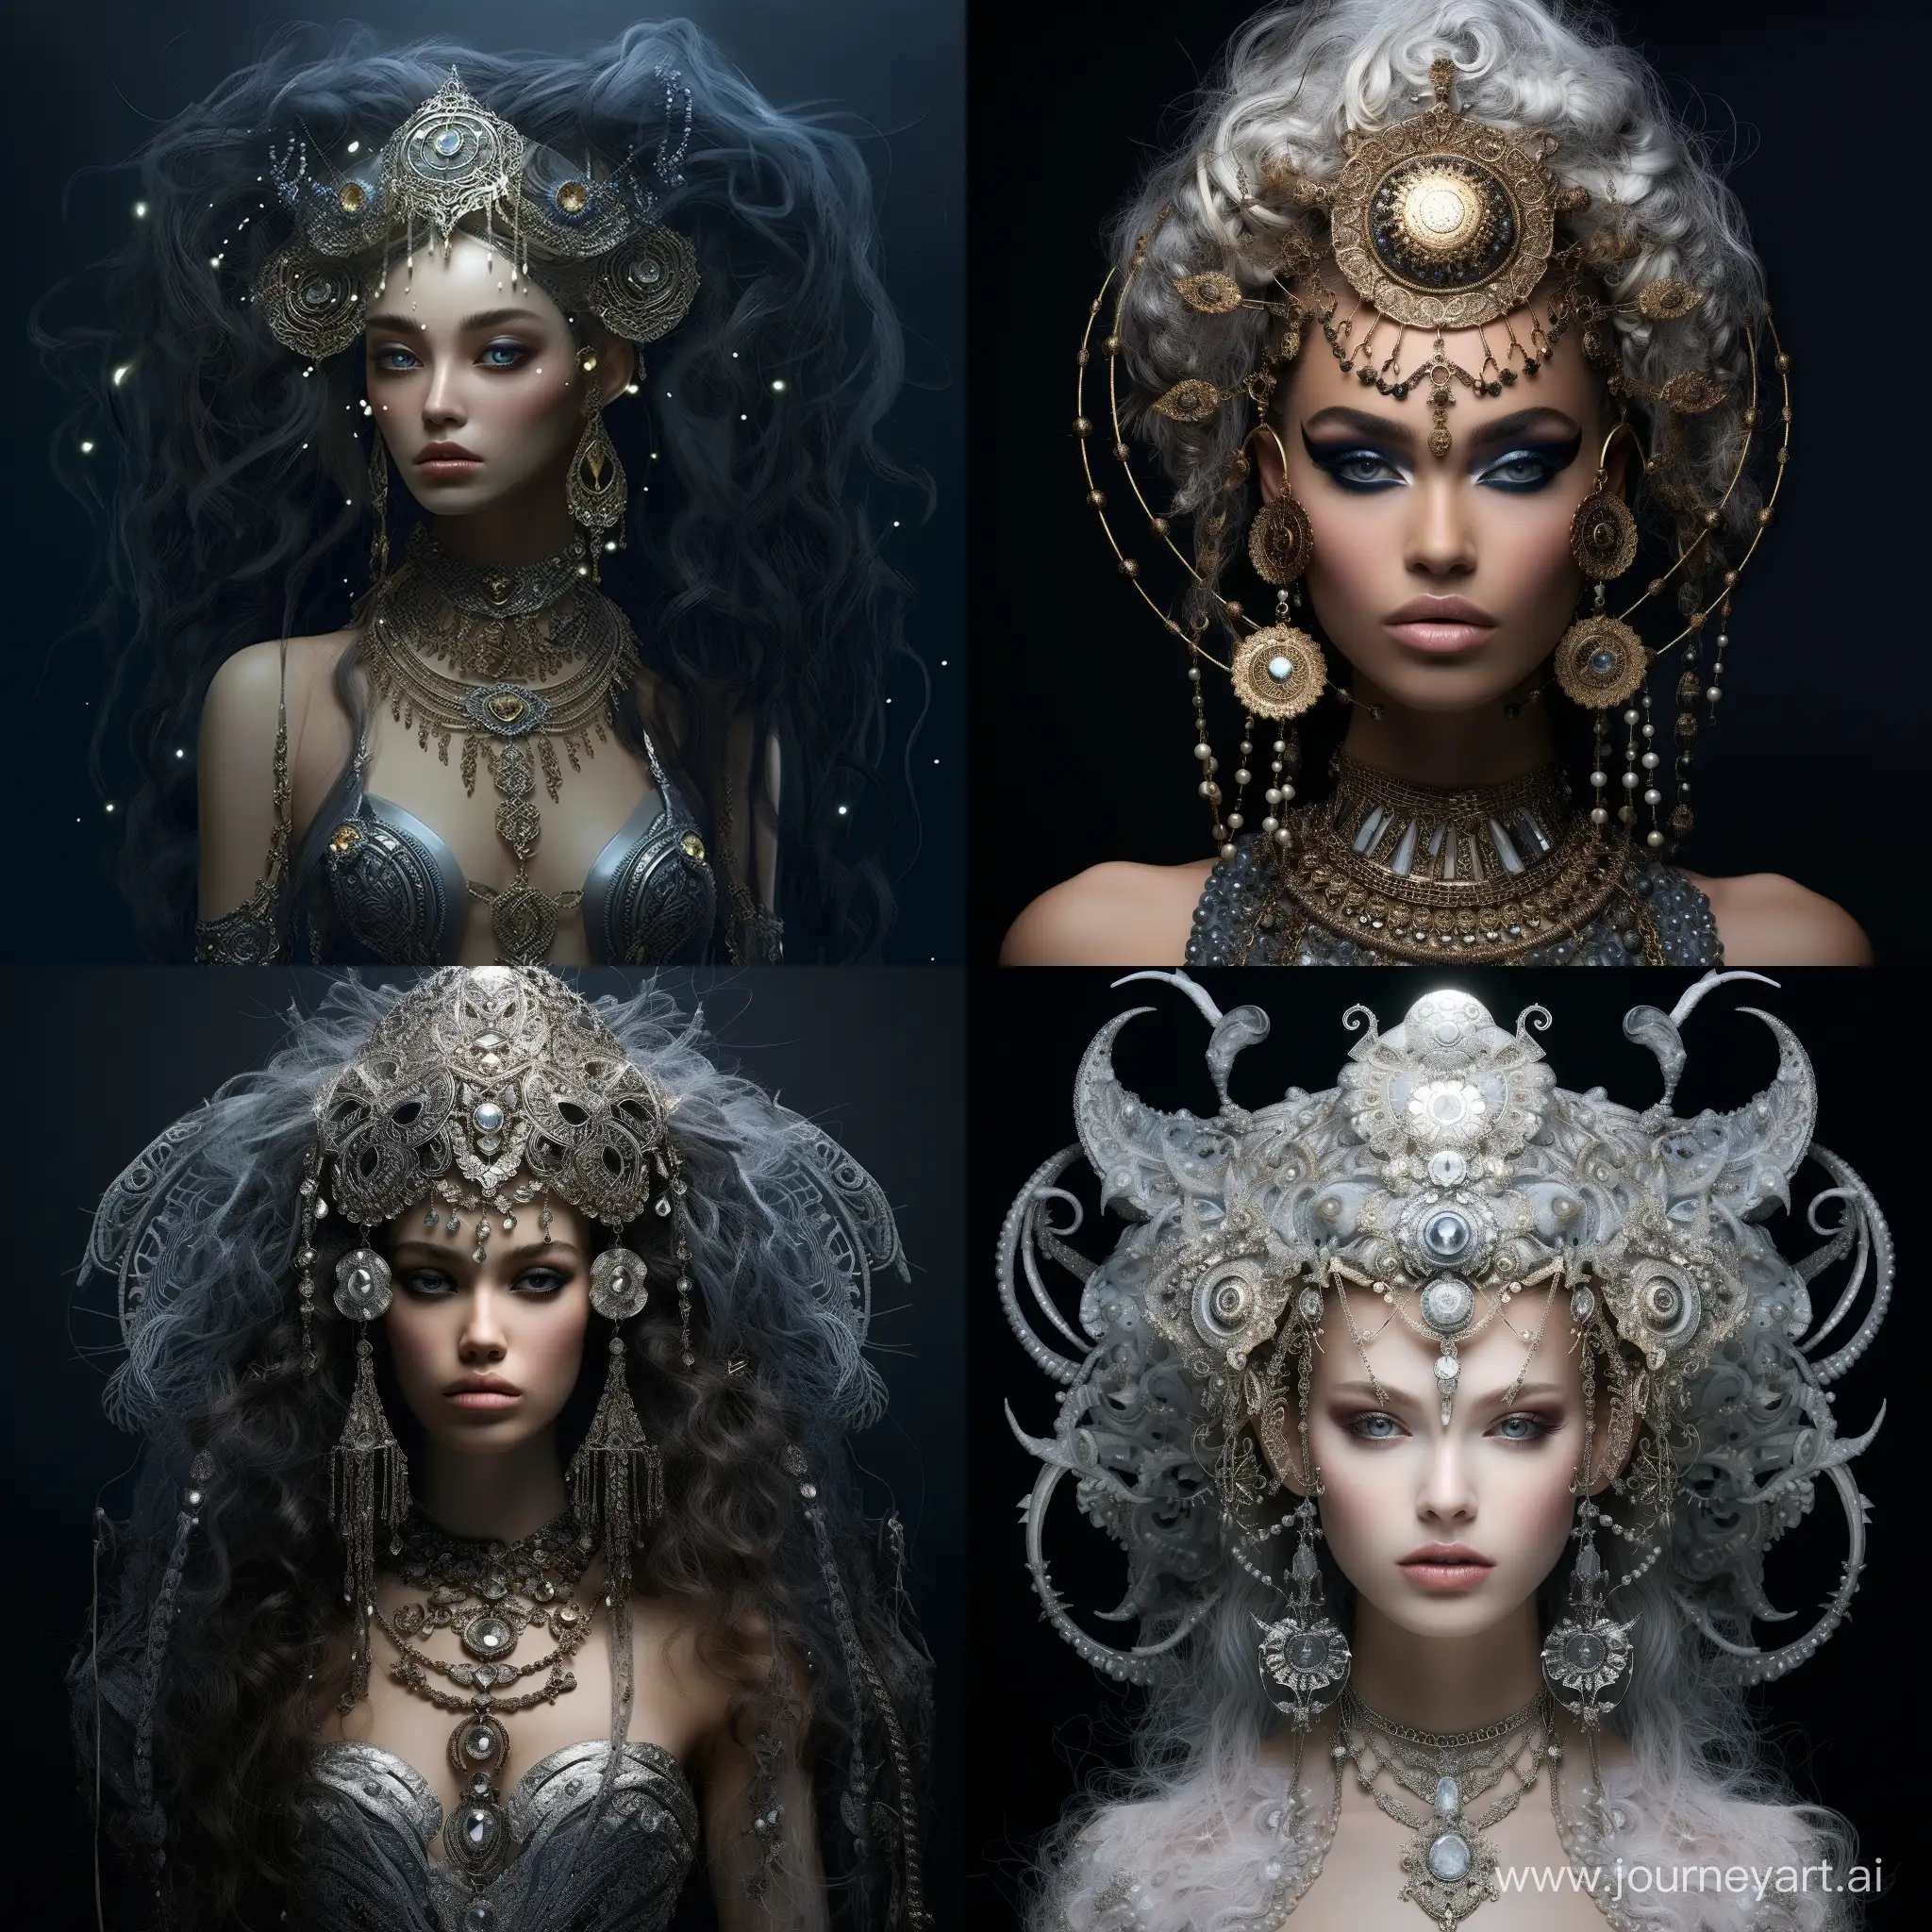 moon princess, elaborate jewelry, expressive eyes, interesting hairstyle